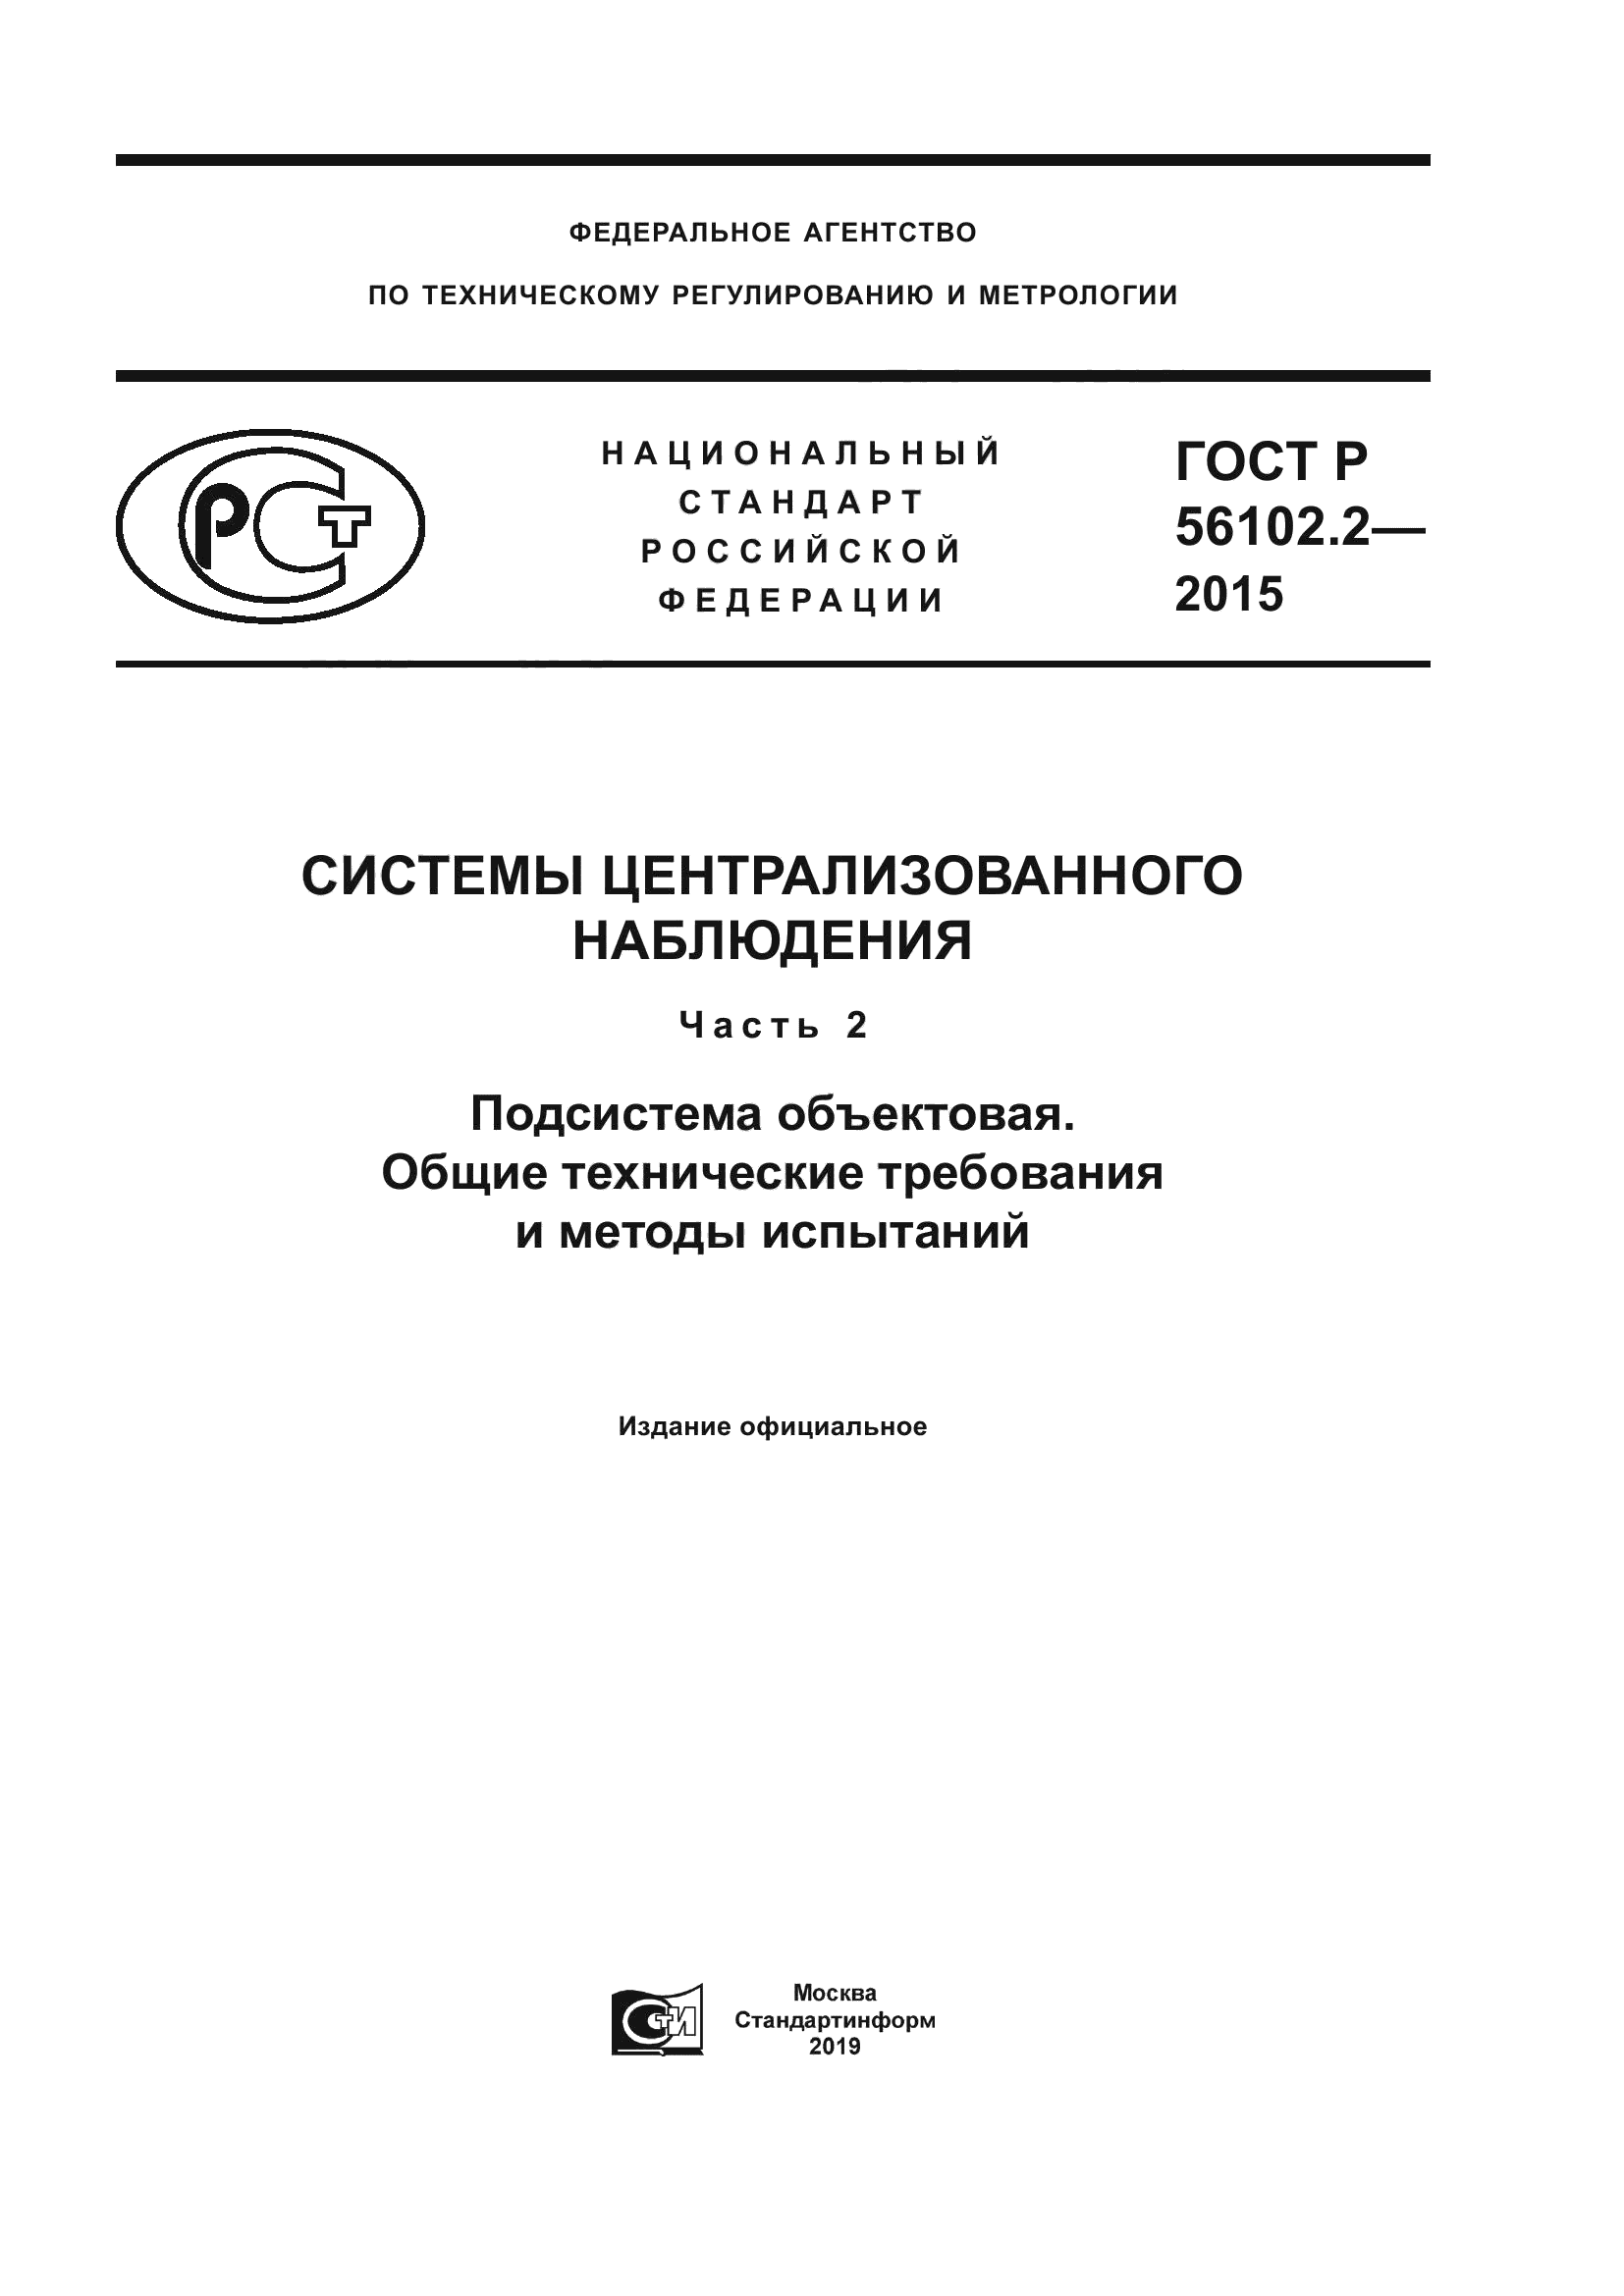 ГОСТ Р 56102.2-2015